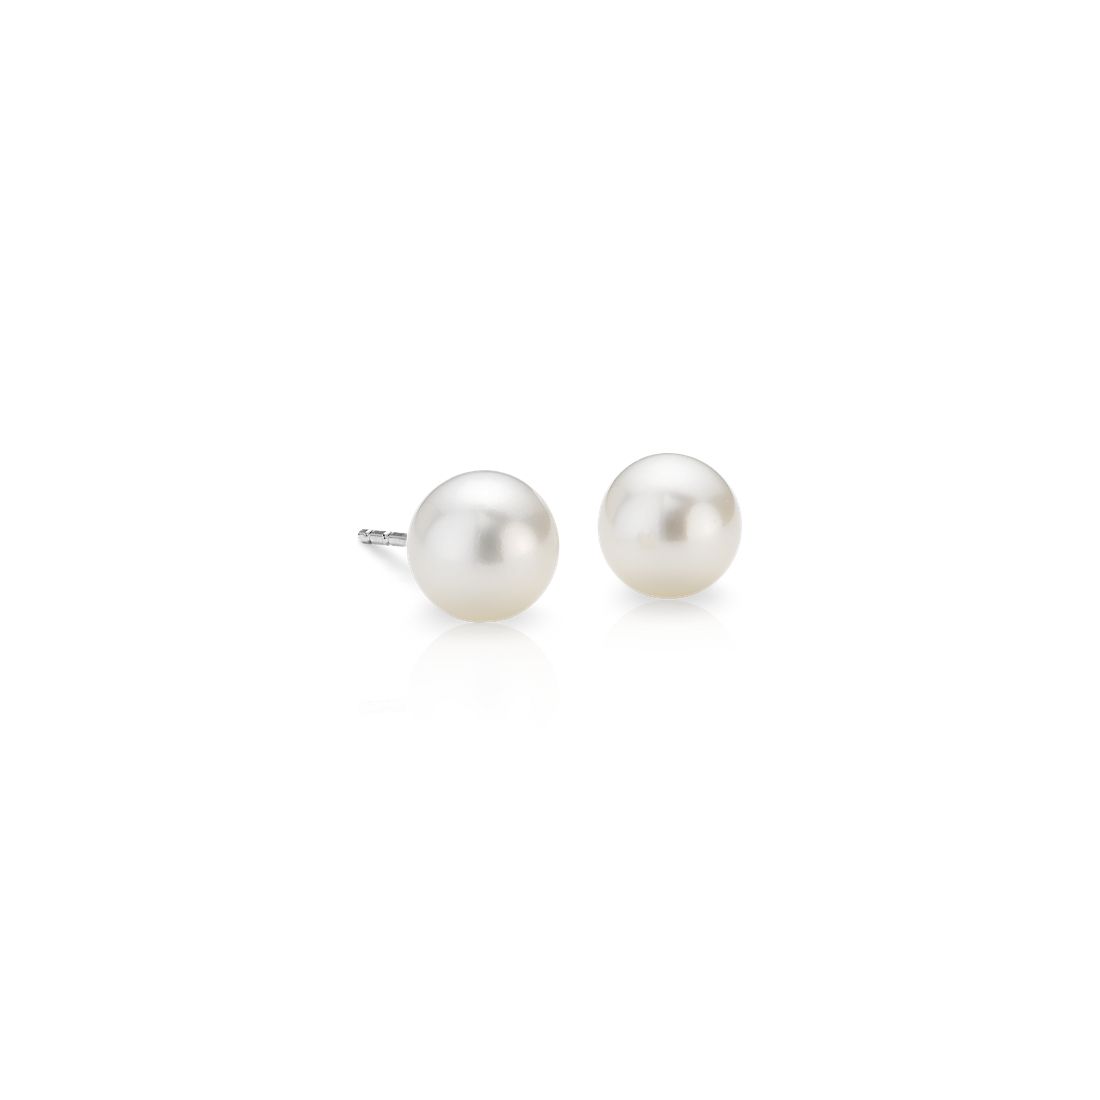 Freshwater Cultured Pearl Stud Earrings in 14k White Gold (6mm)